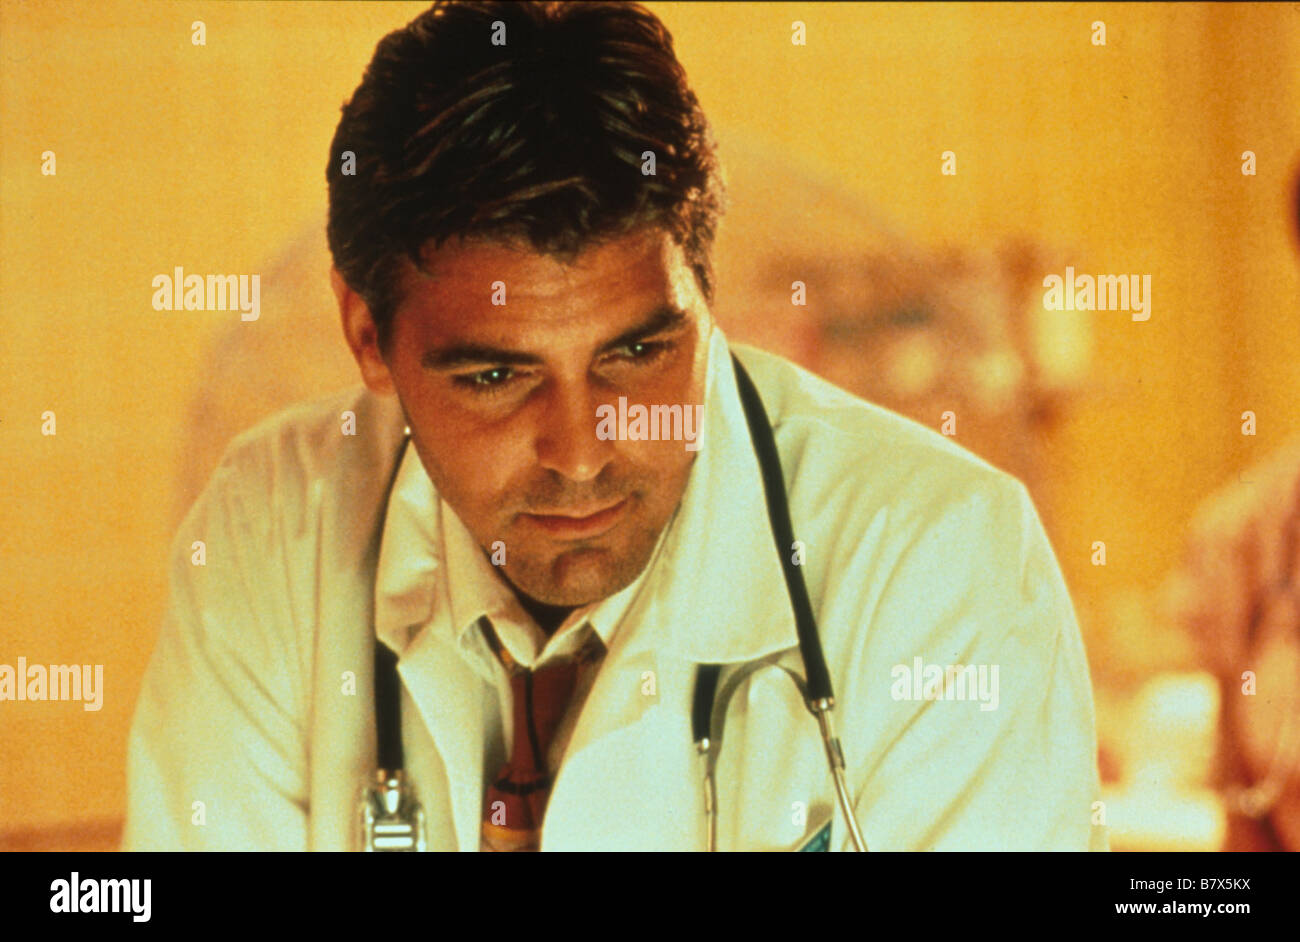 ER TV Series 1994 - 2009 USA George Clooney Stock Photo